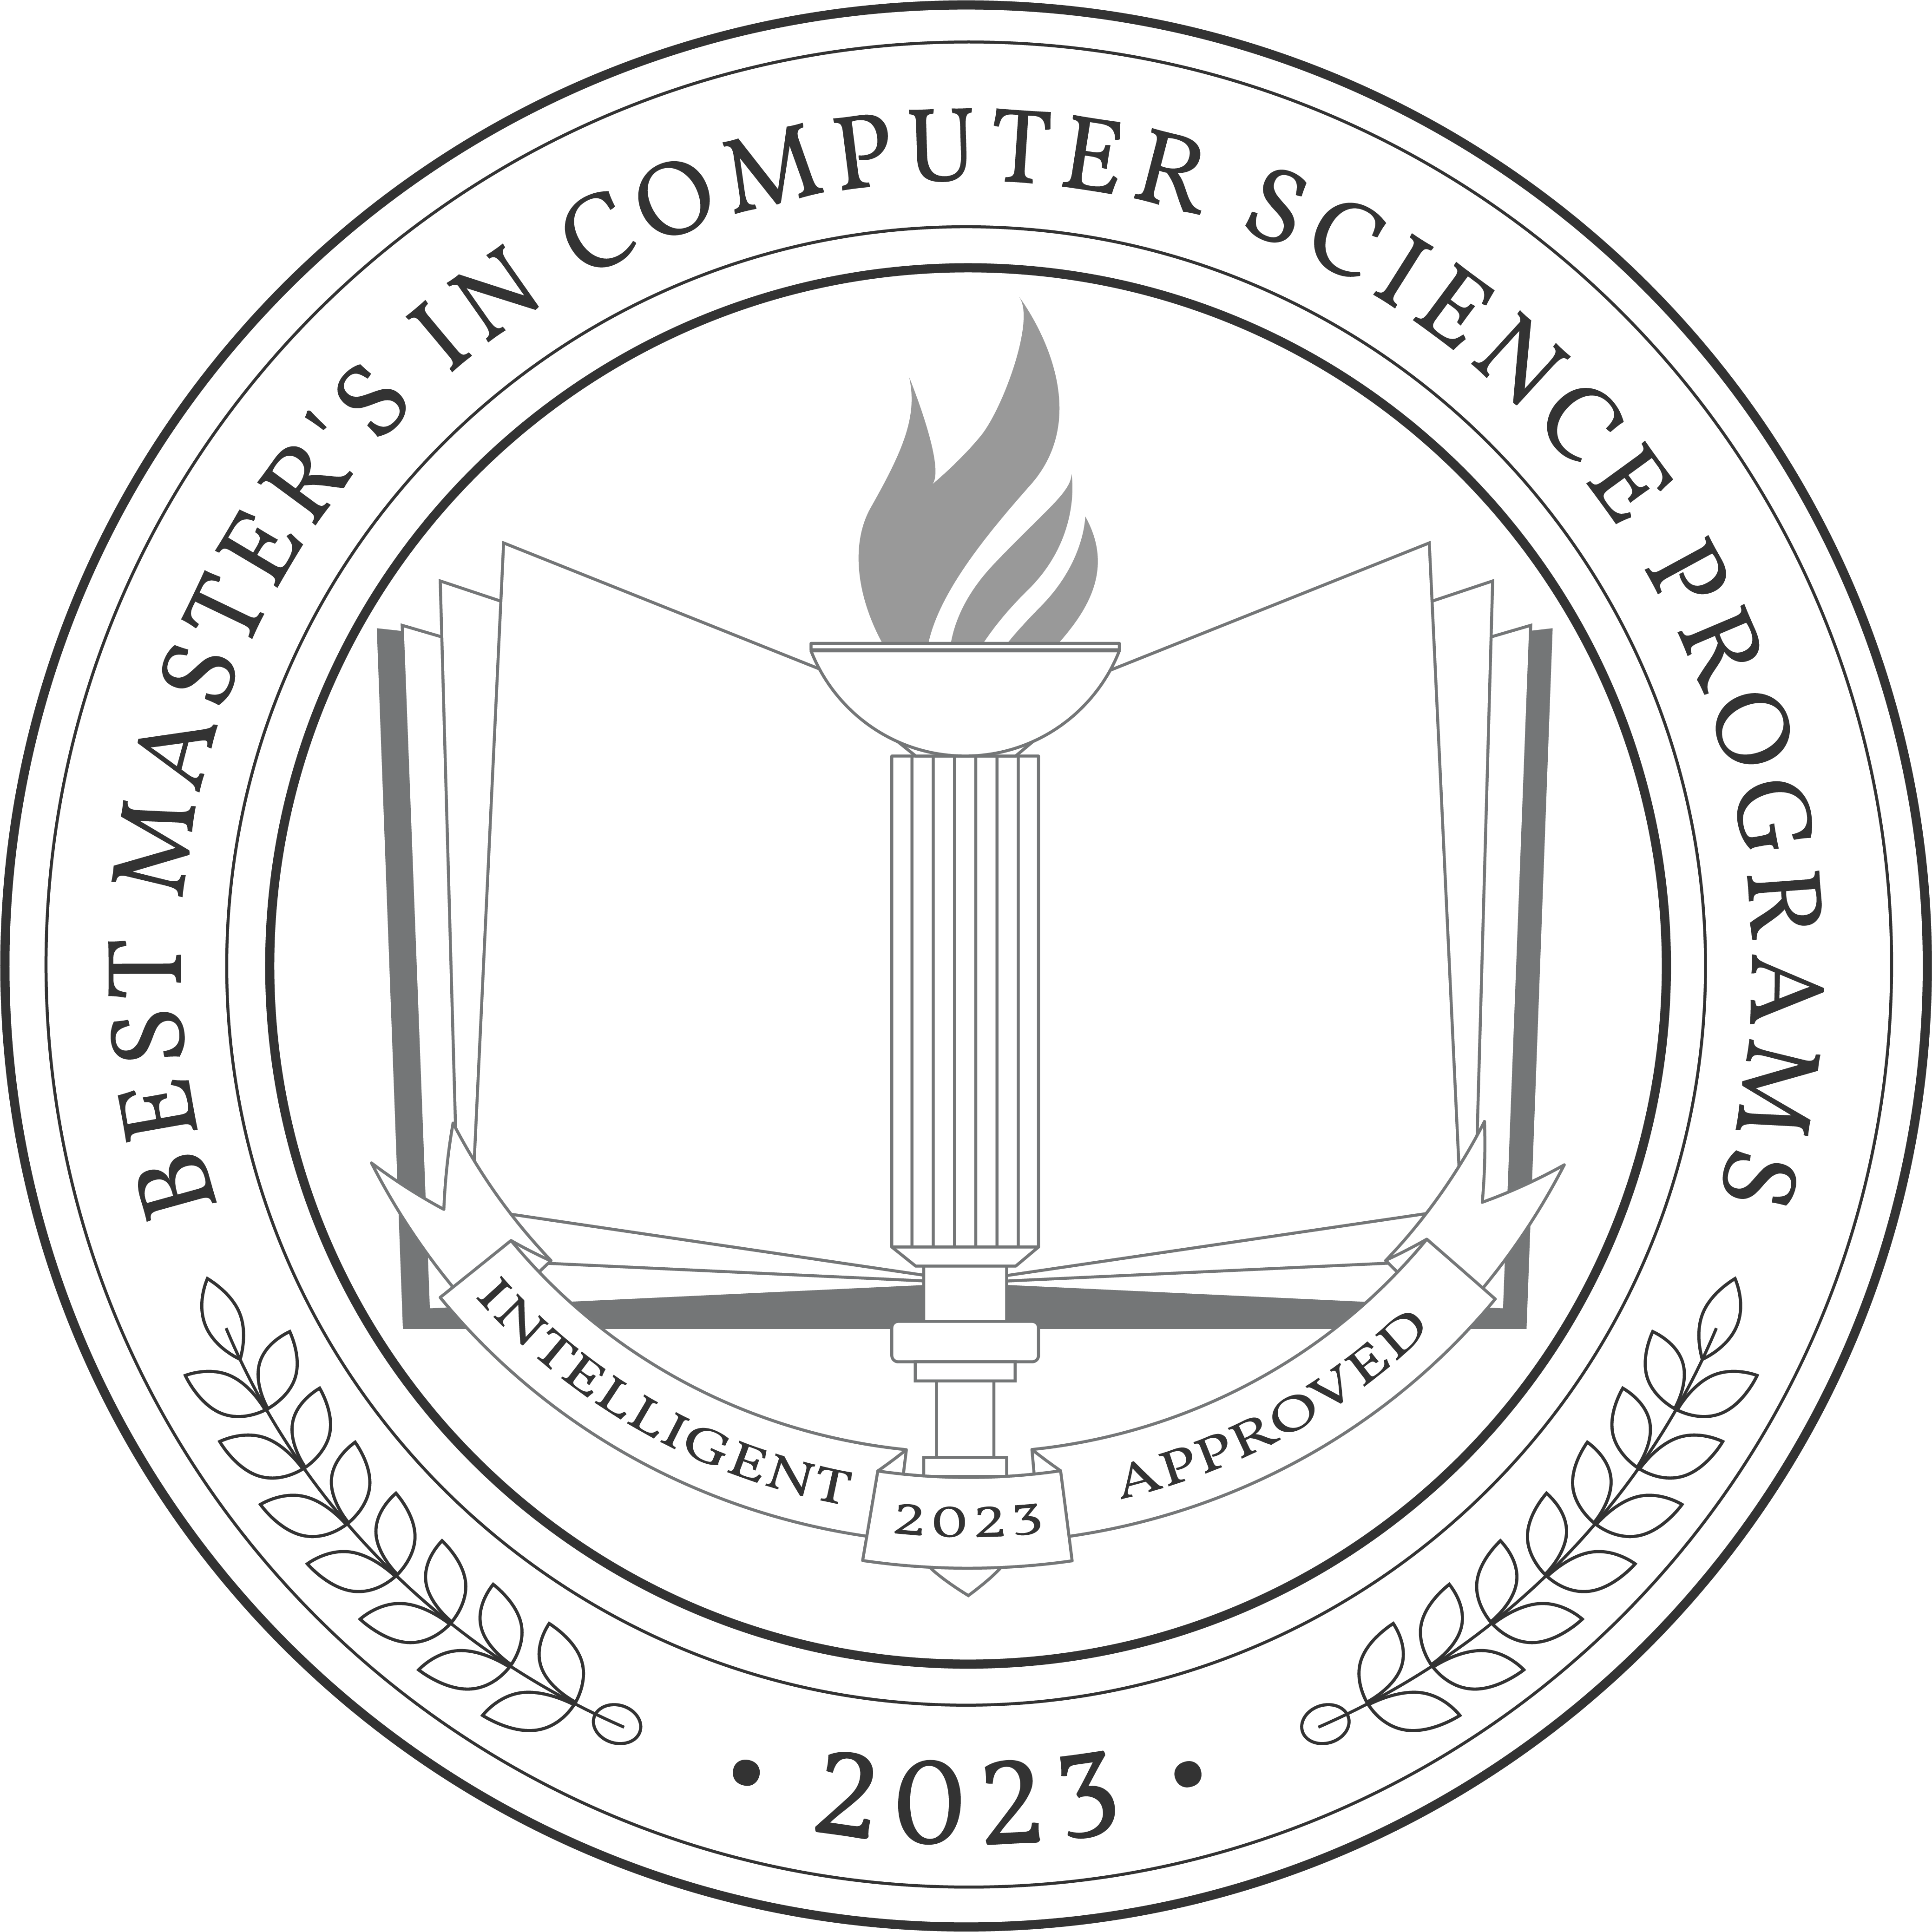 Best Master's in Computer Science Programs 2023